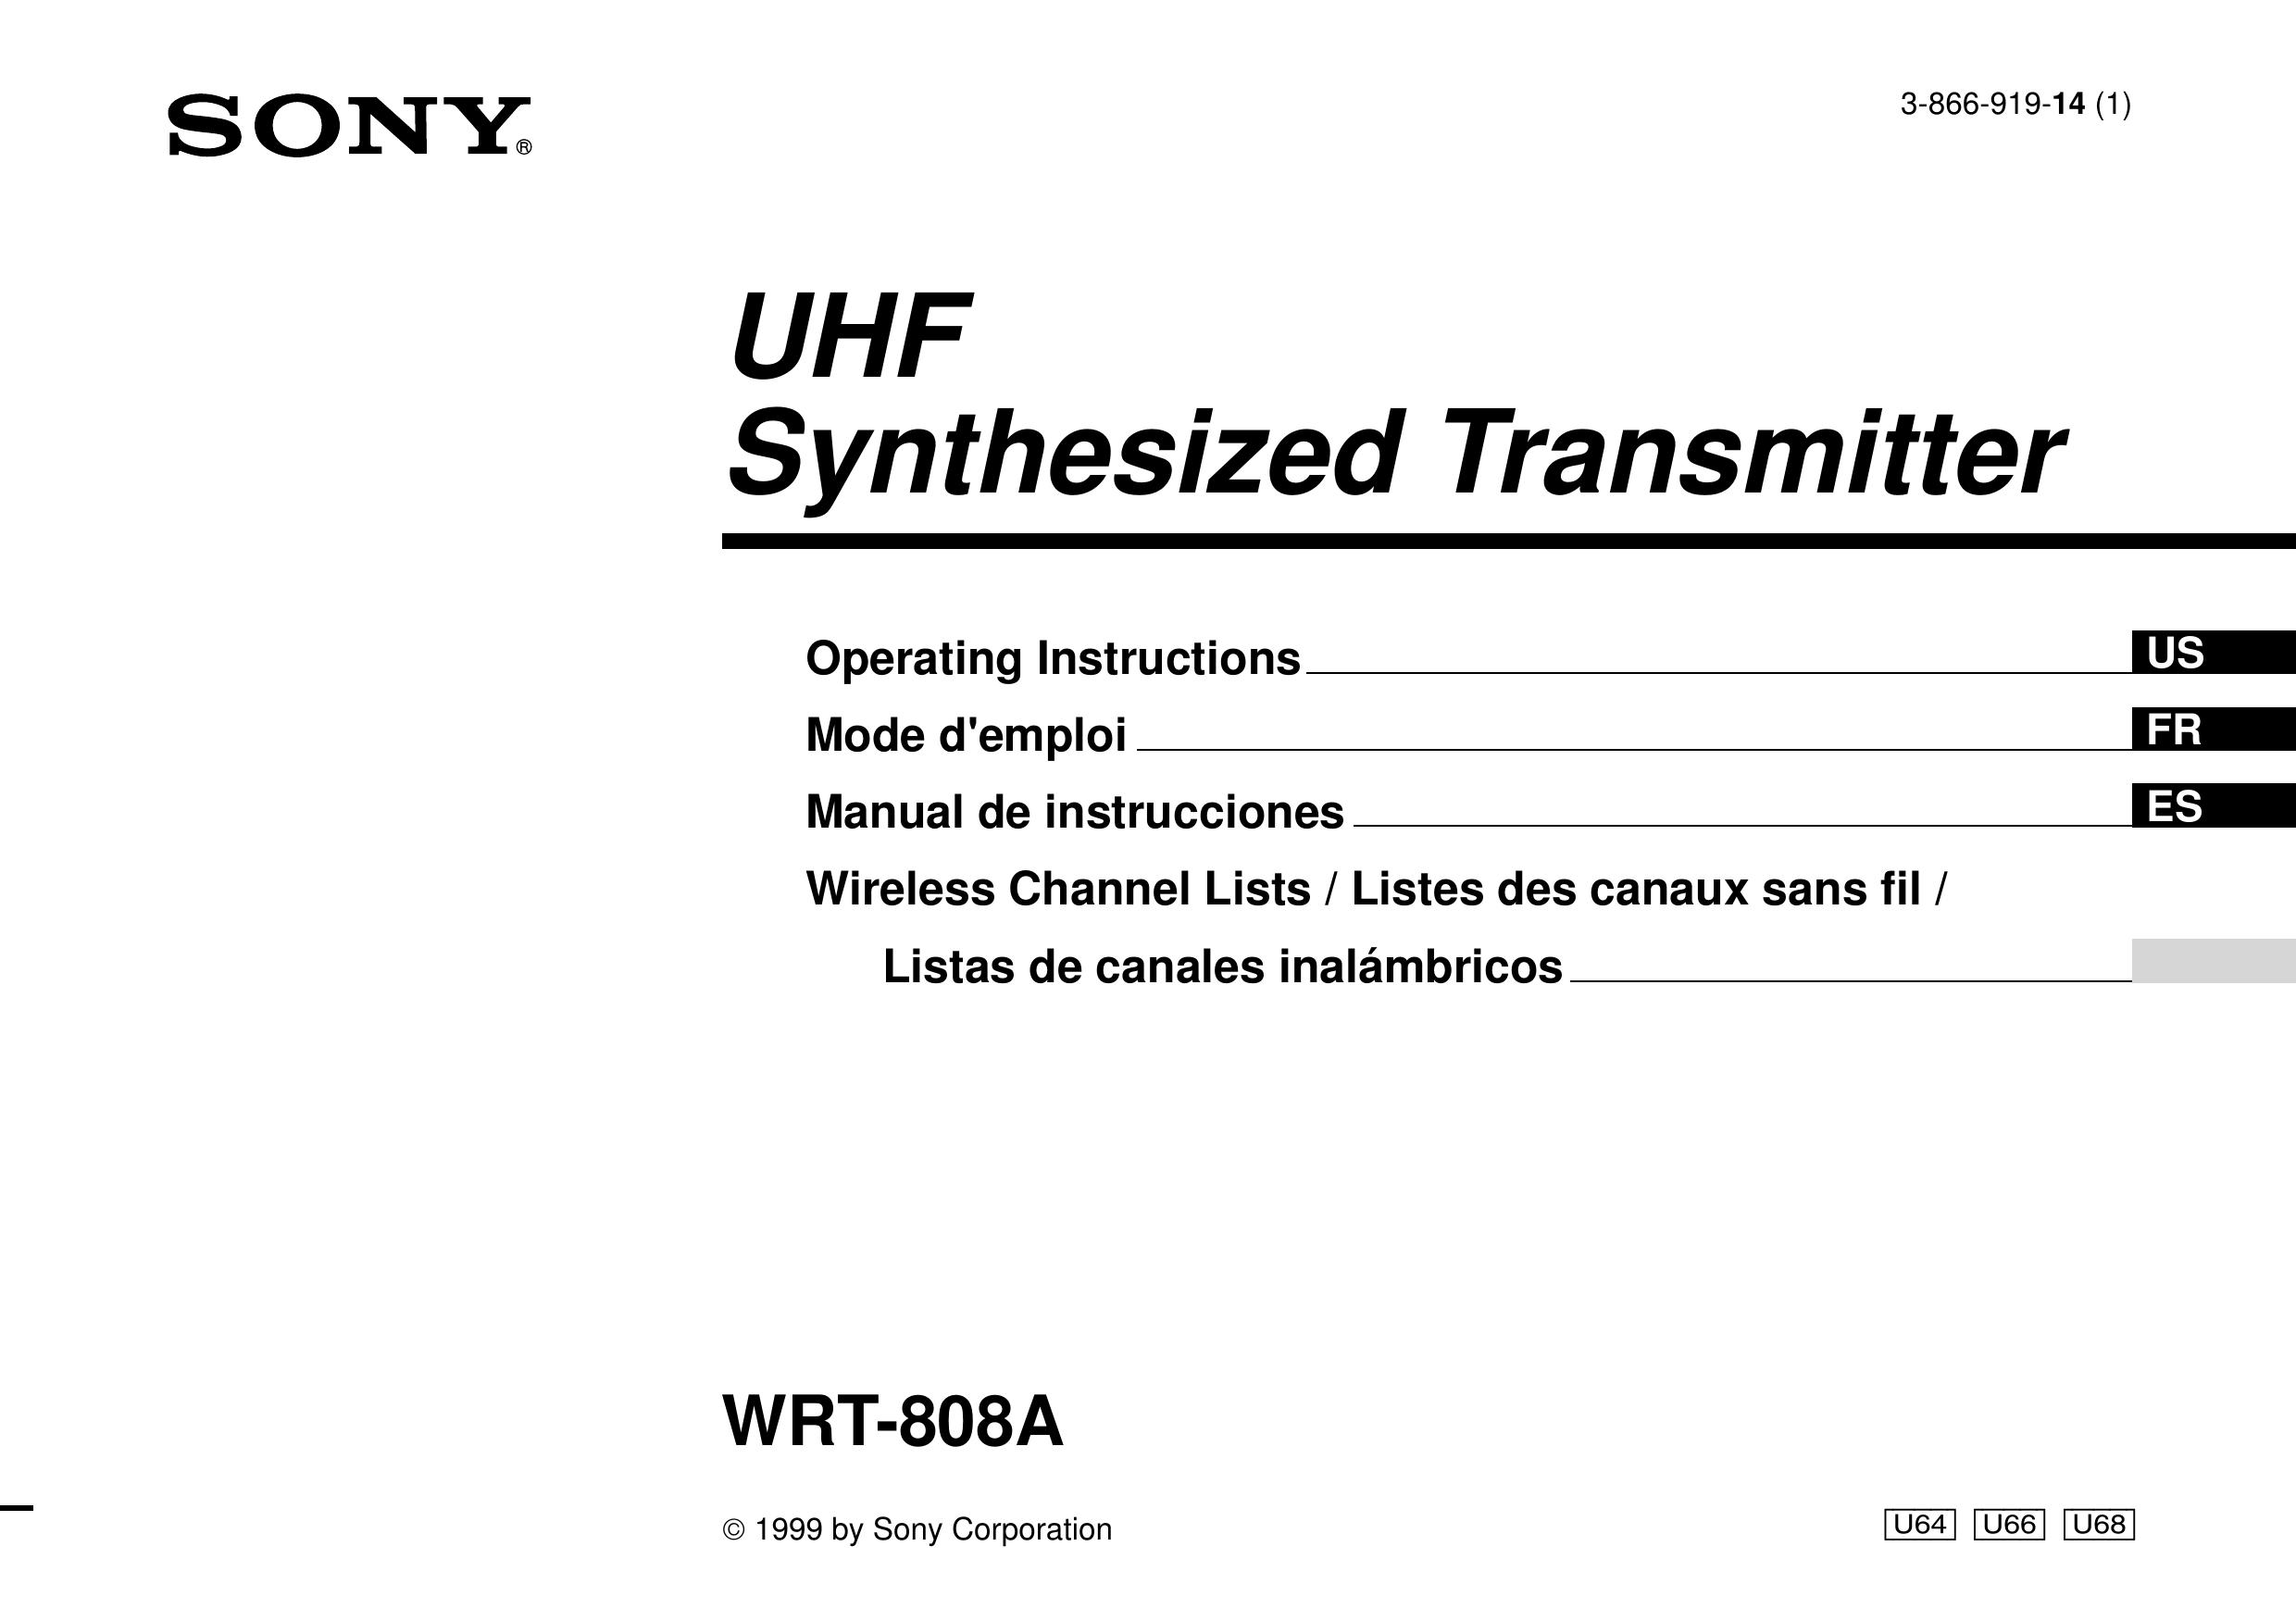 Sony WRT-808A Recording Equipment User Manual